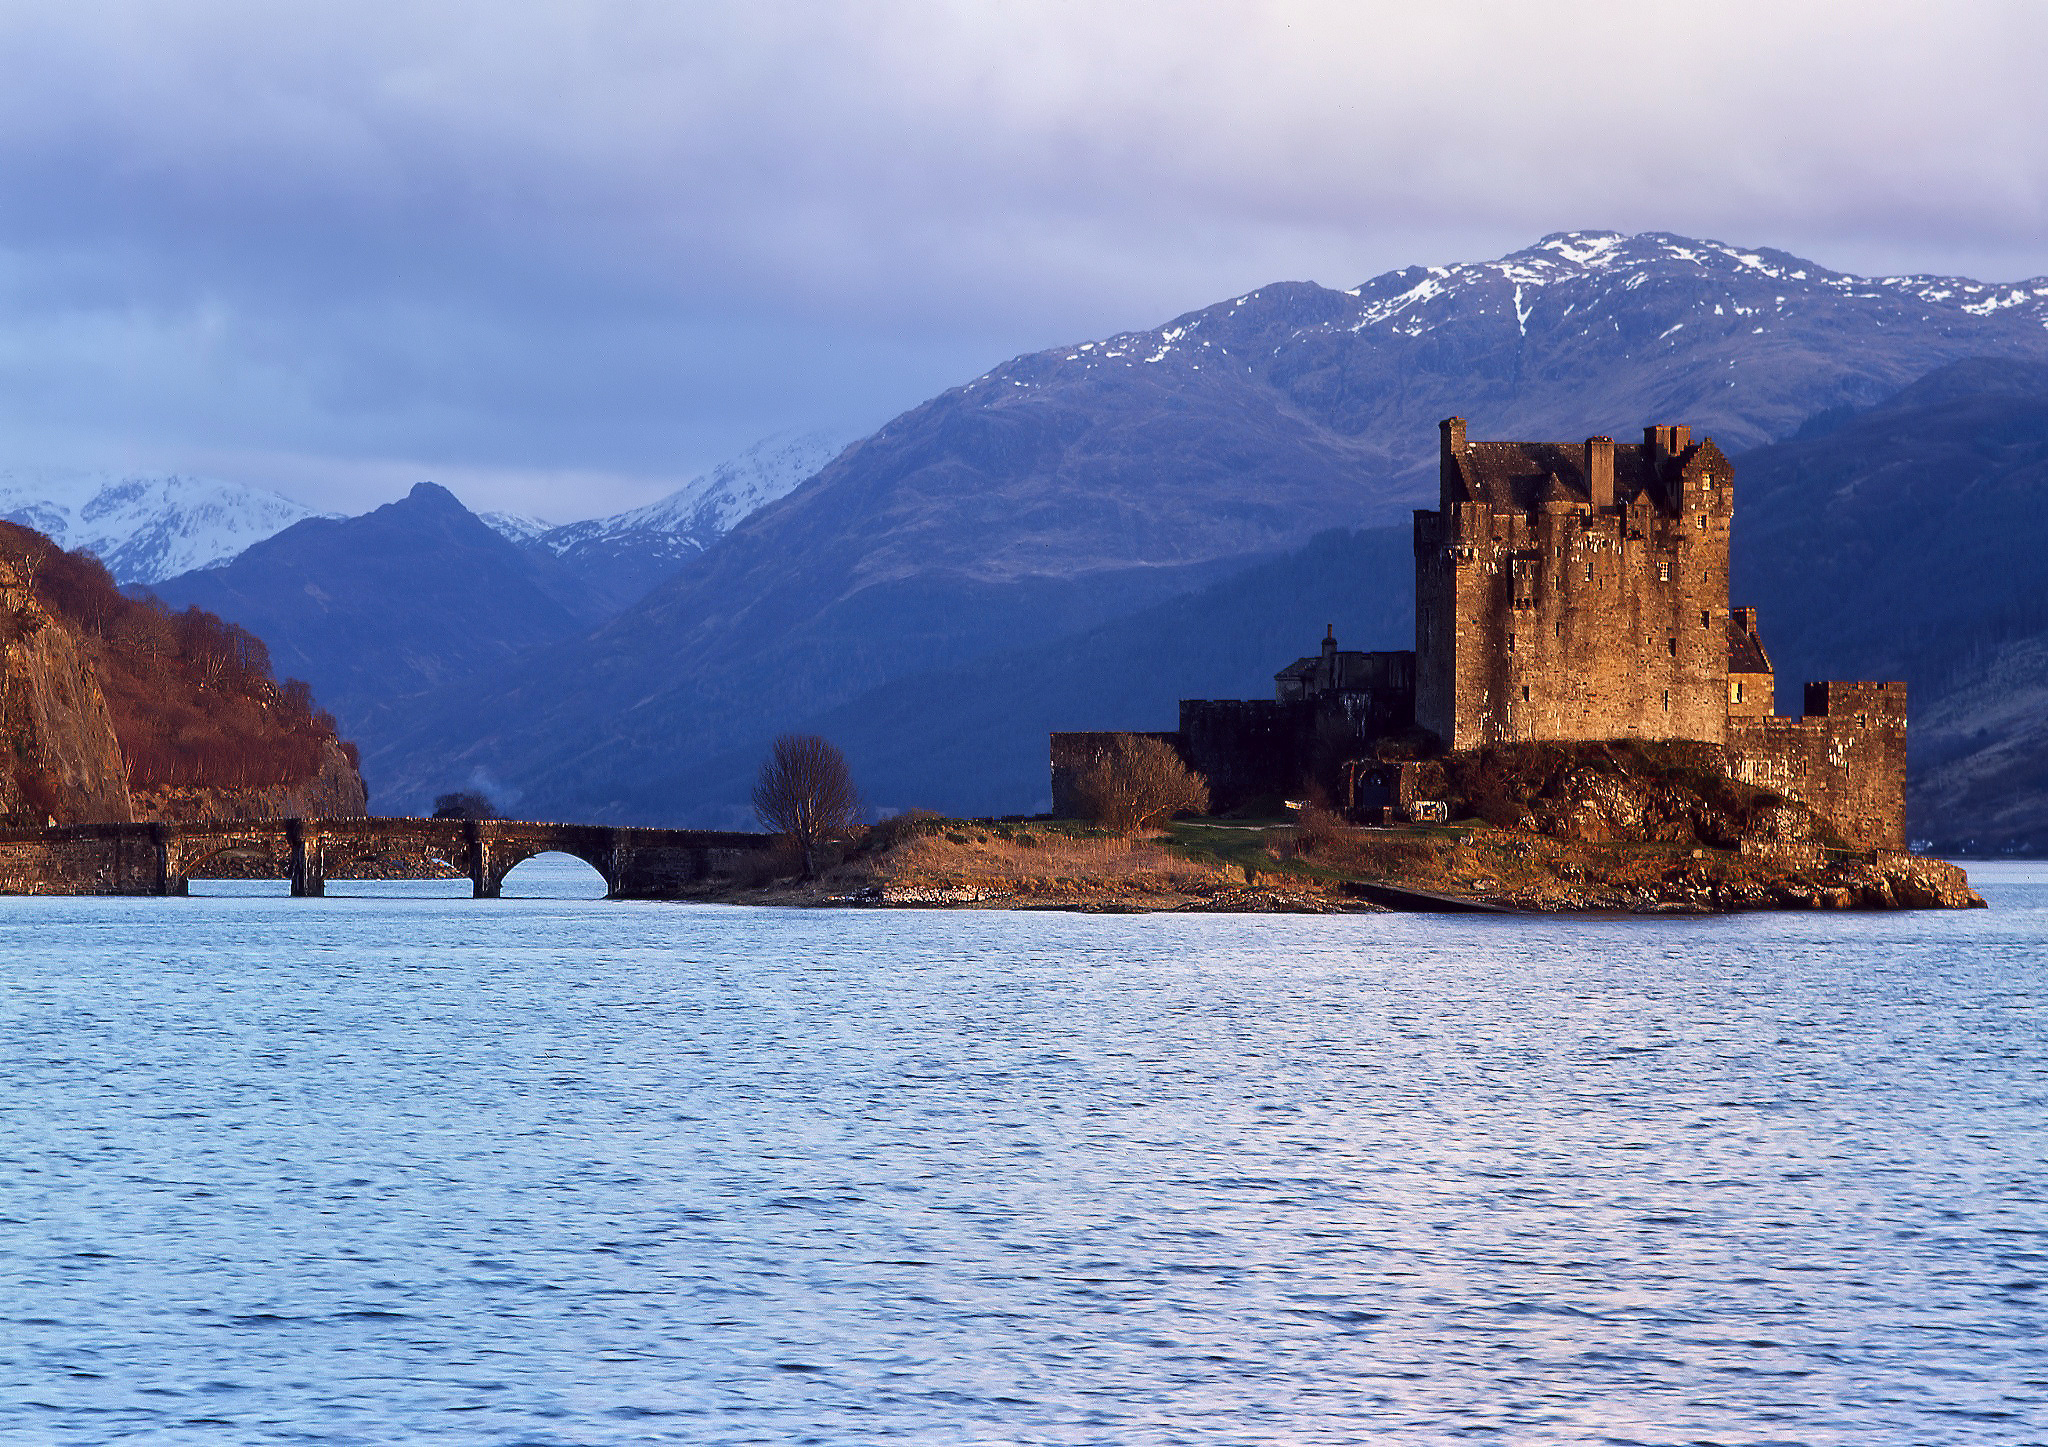 man made, eilean donan castle, bridge, castle, lake, mountain, scotland, castles